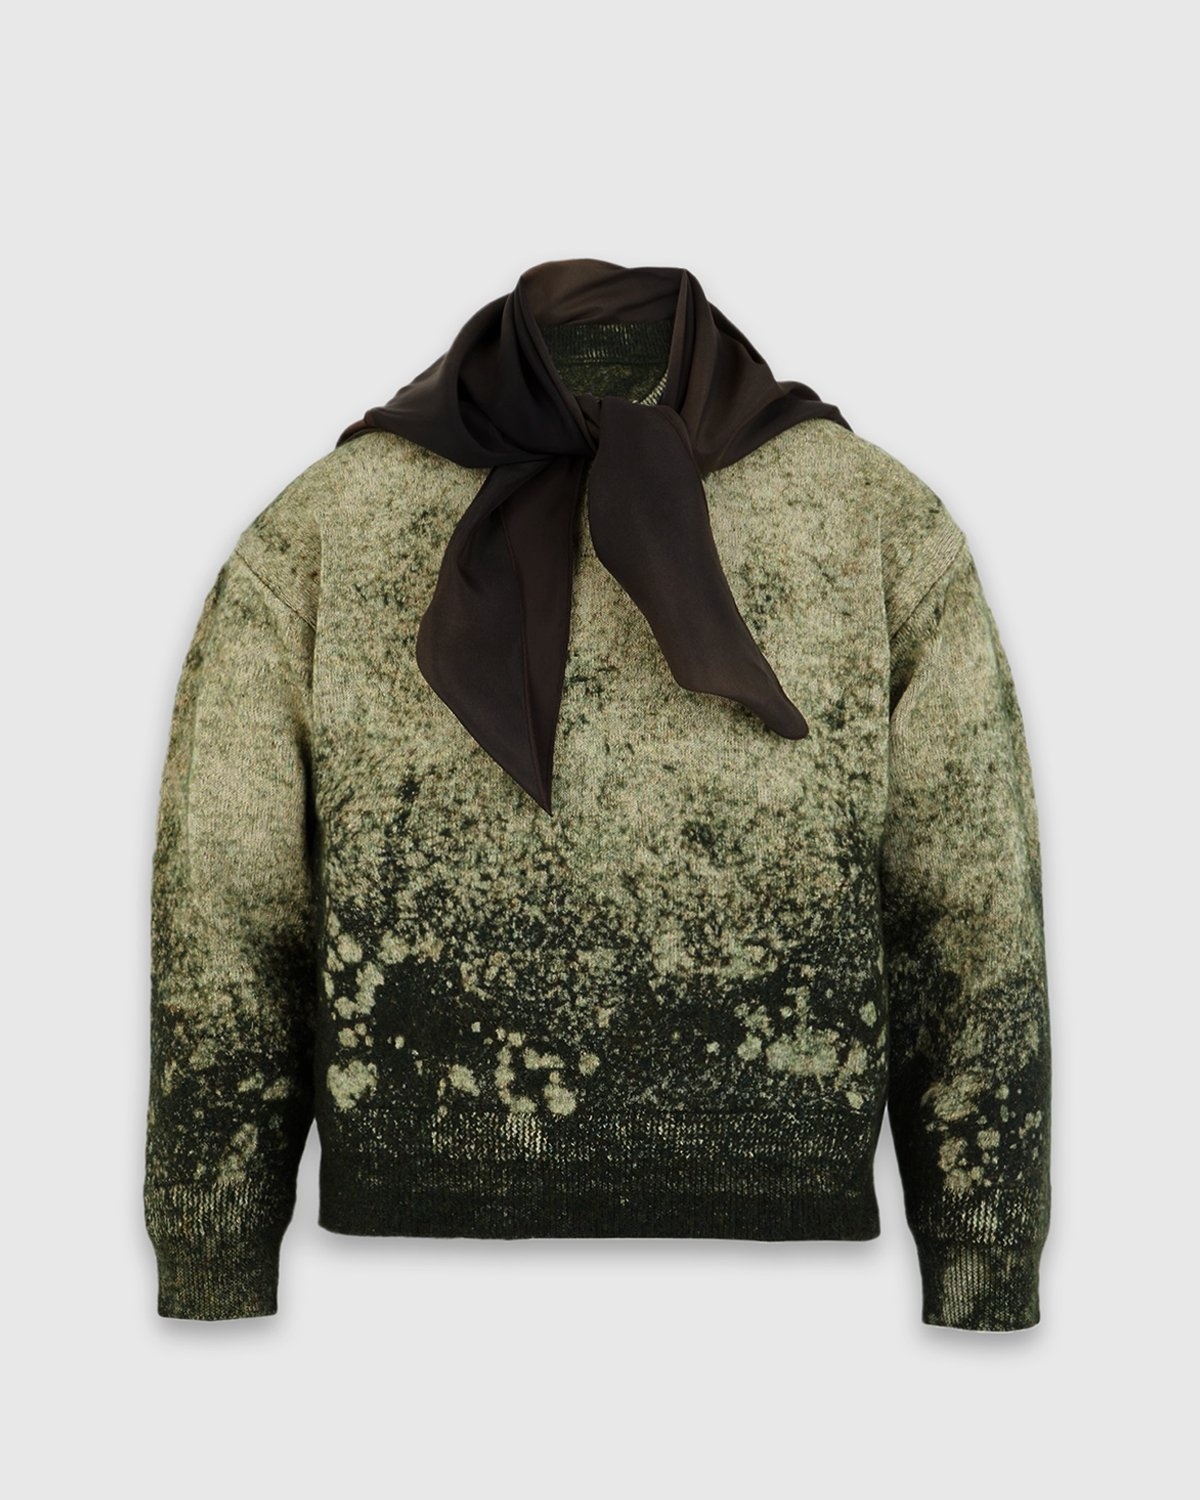 Maison Margiela – Discharged Wool Sweater - Knitwear - Green - Image 1